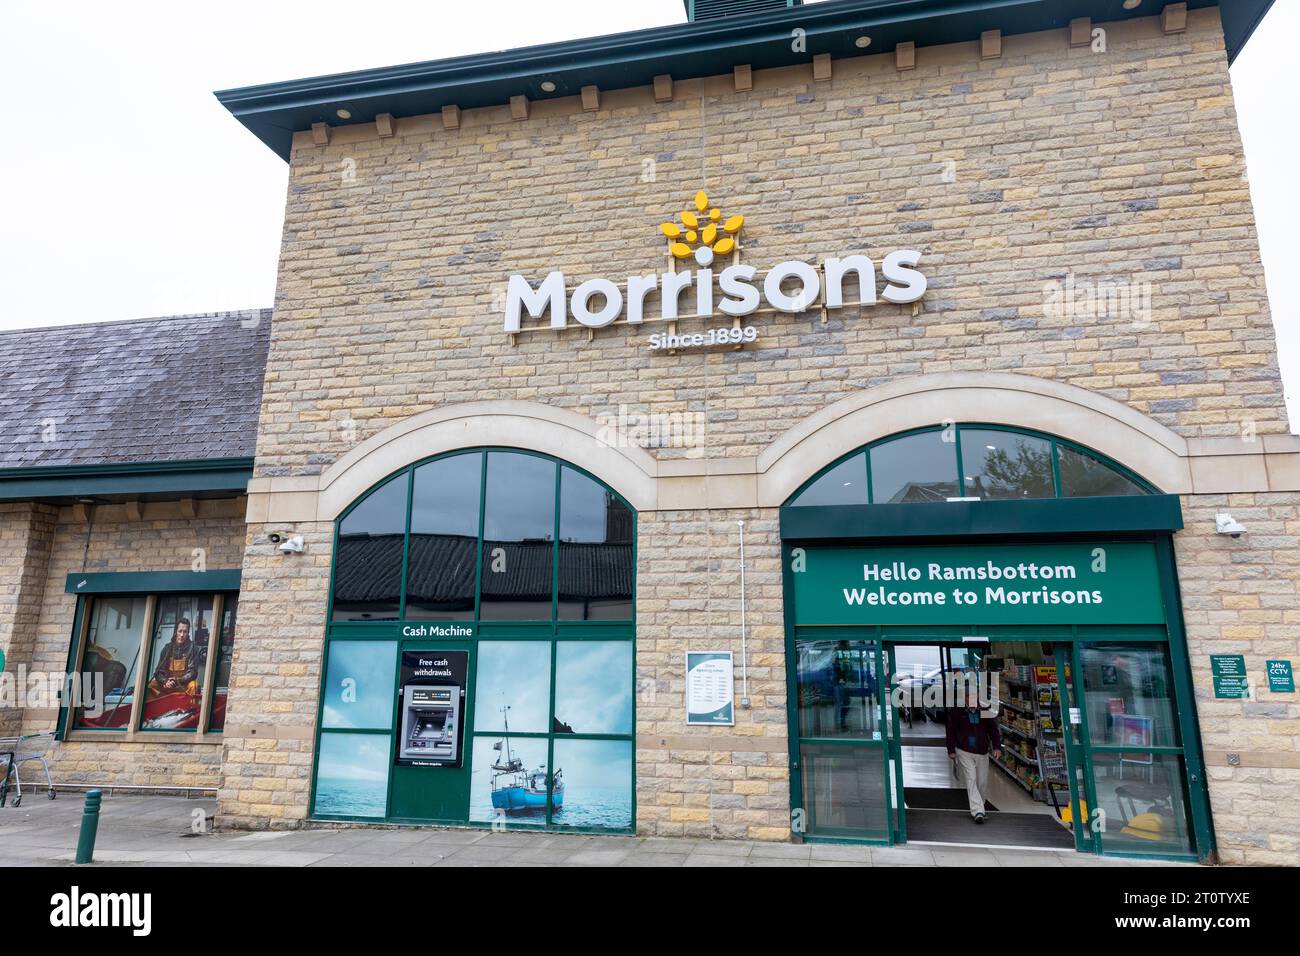 Morrisons british supermarket in Ramsbottom, Greater Manchester,England,UK Stock Photo